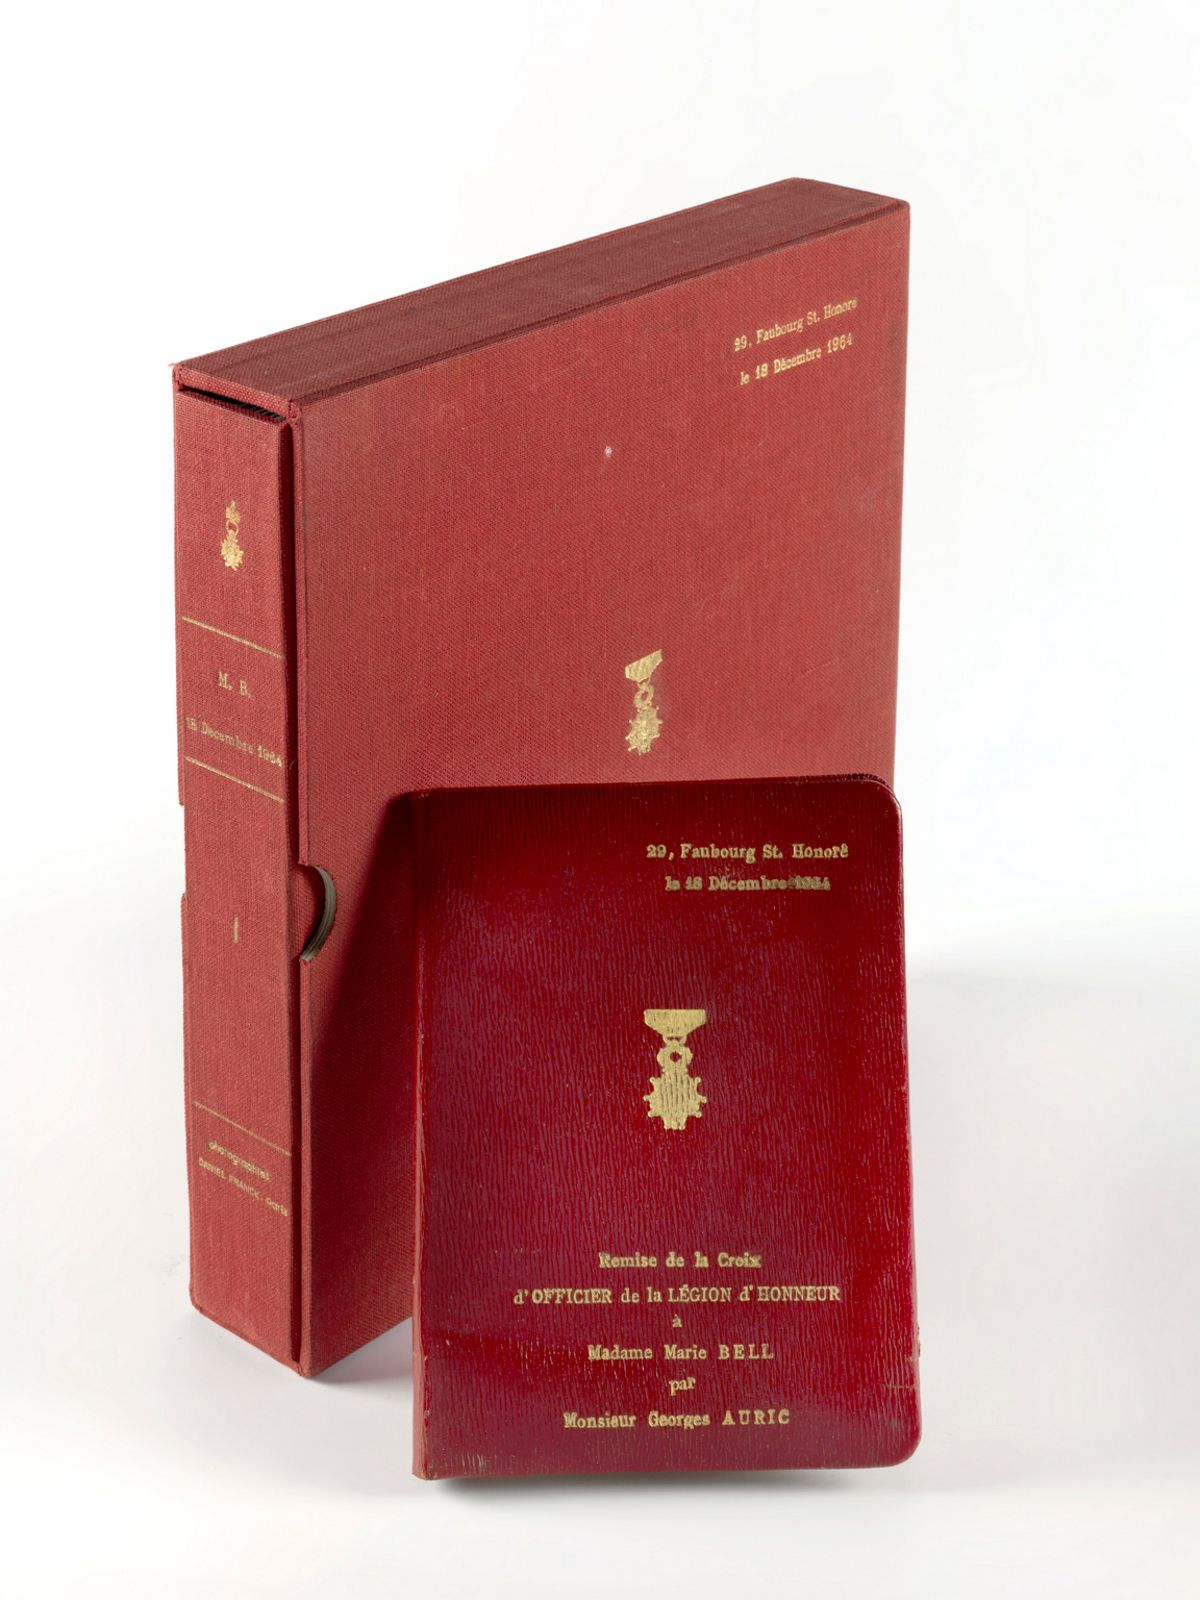 Null [丹尼尔-弗朗克的照片]为乔治-奥里克向玛丽-贝尔颁发荣誉军团军官十字勋章而用手风琴装裱的12张照片专辑（11x16）。附有一本红布相册，装在一个红布&hellip;